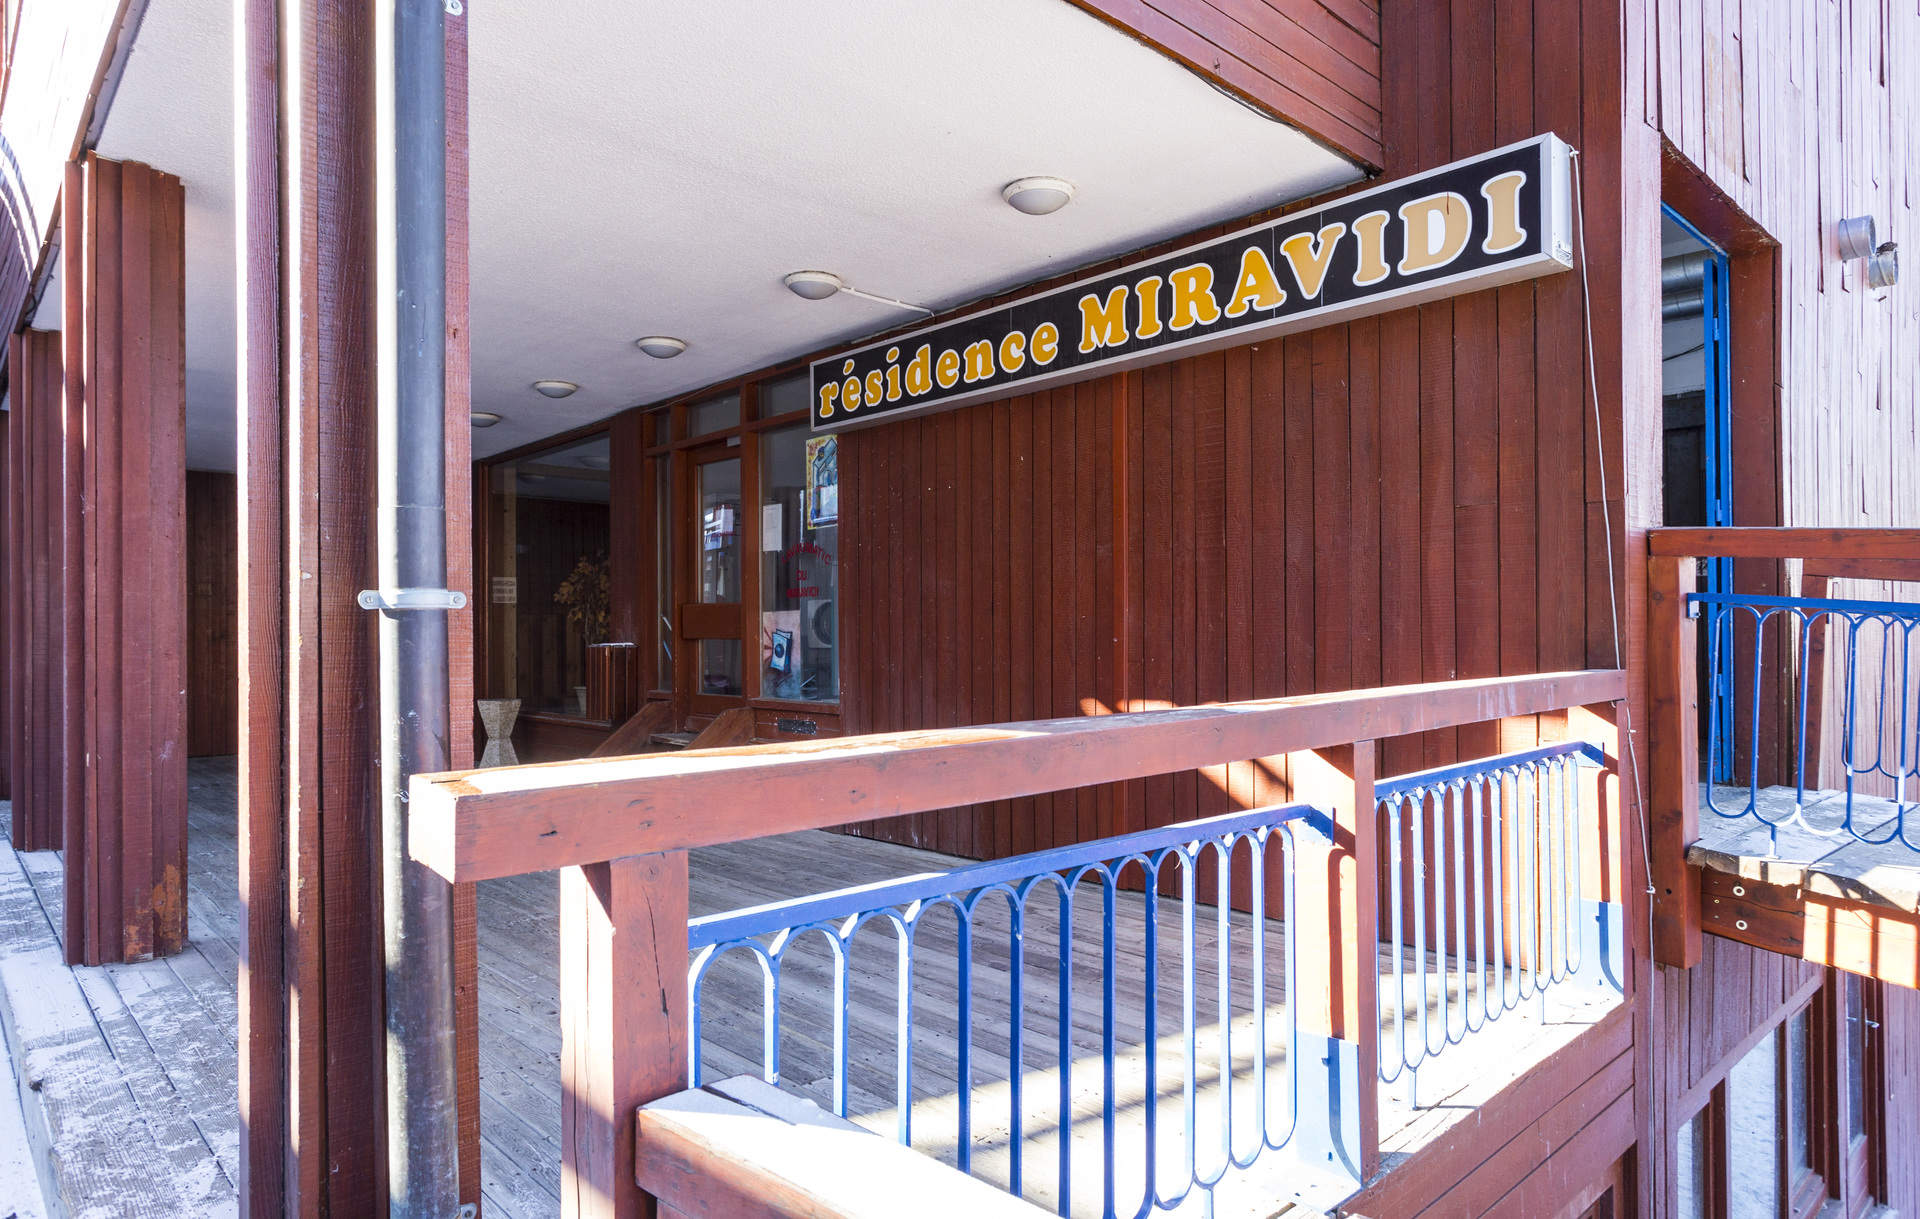 travelski home choice - Apartements MIRAVIDI - Les Arcs 1800